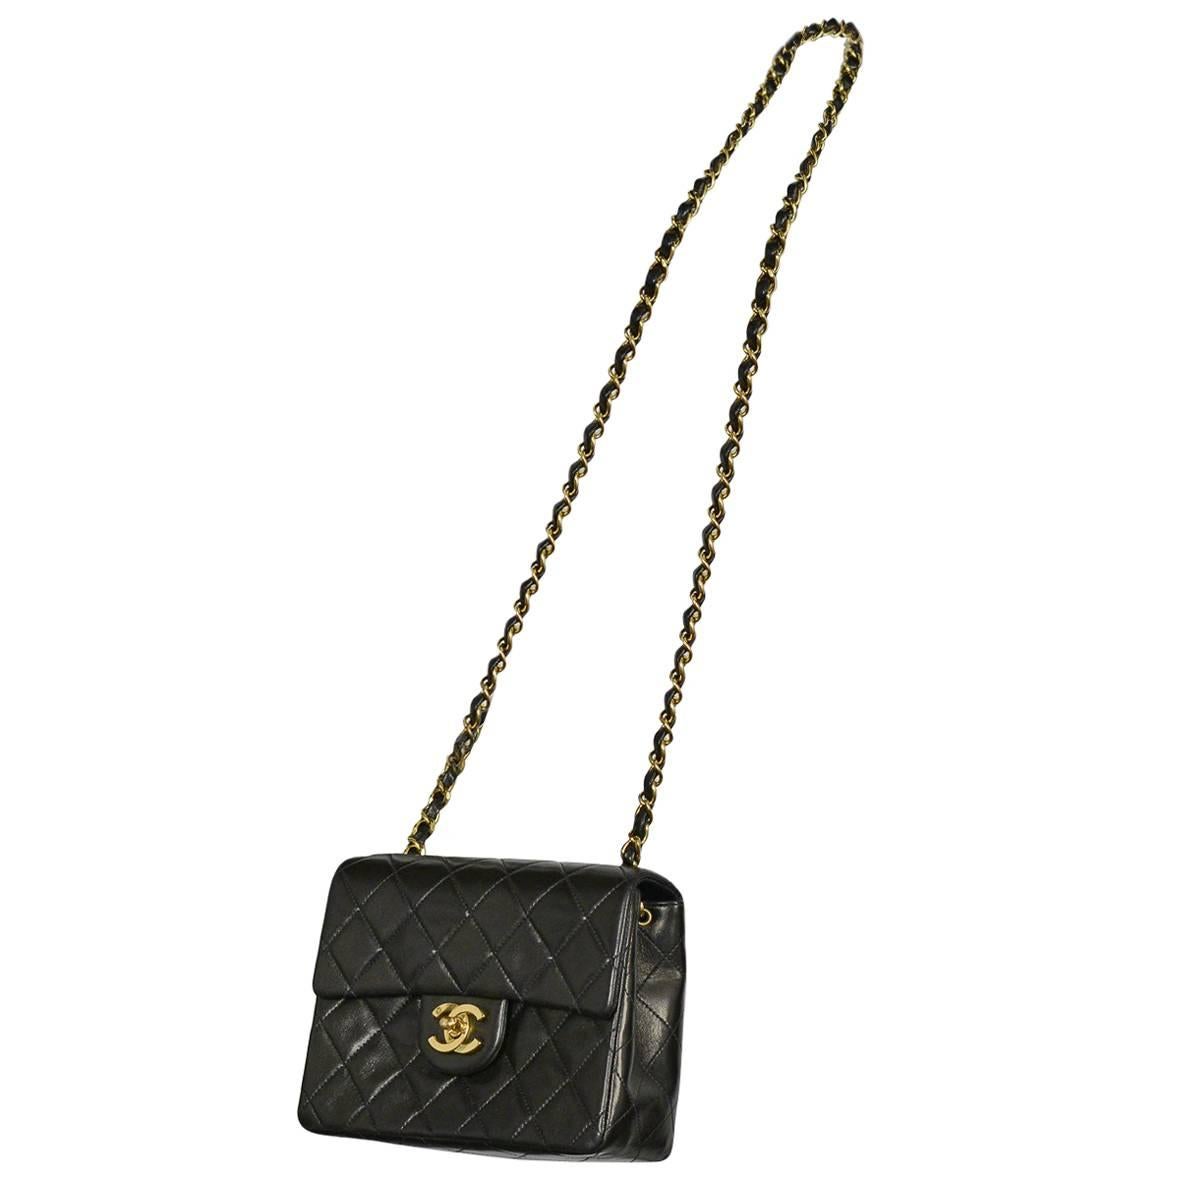 Vintage Chanel Classic Mini Quilted Black Leather Shoulder Bag